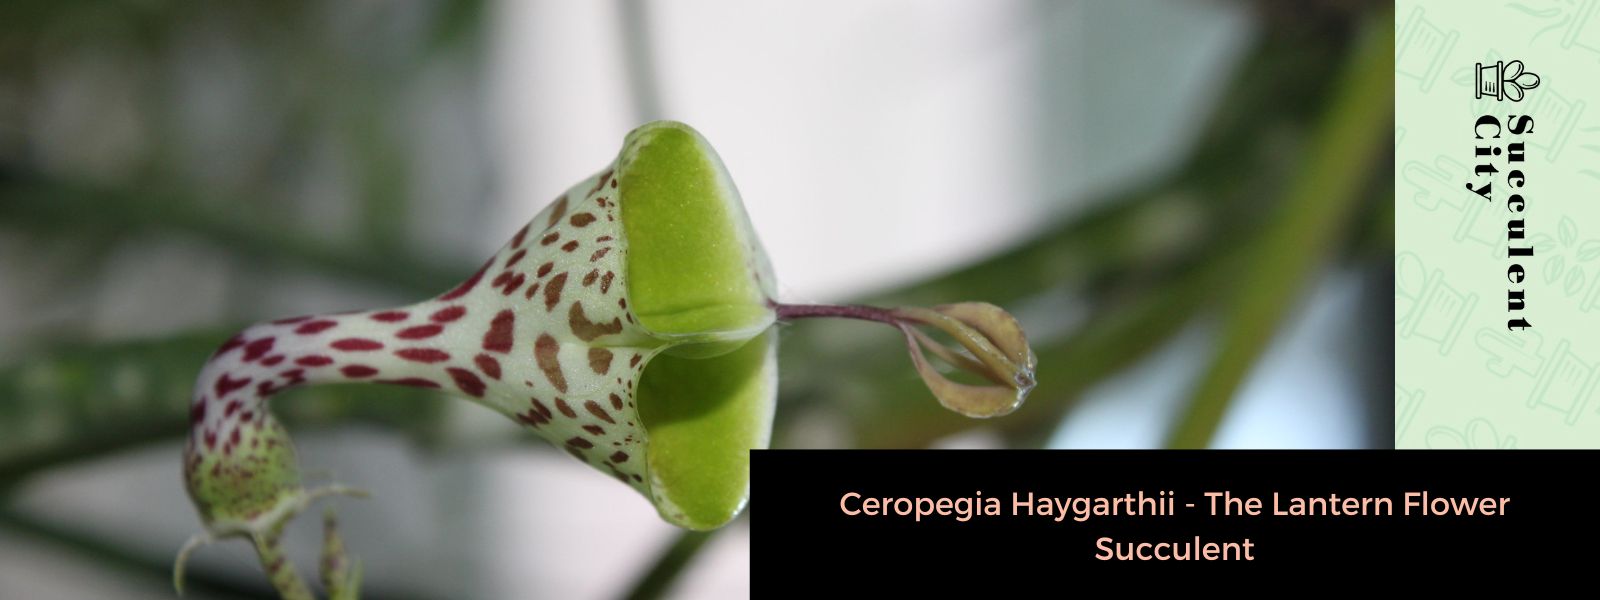 Ceropegia Haygarthii - La suculenta flor de linterna